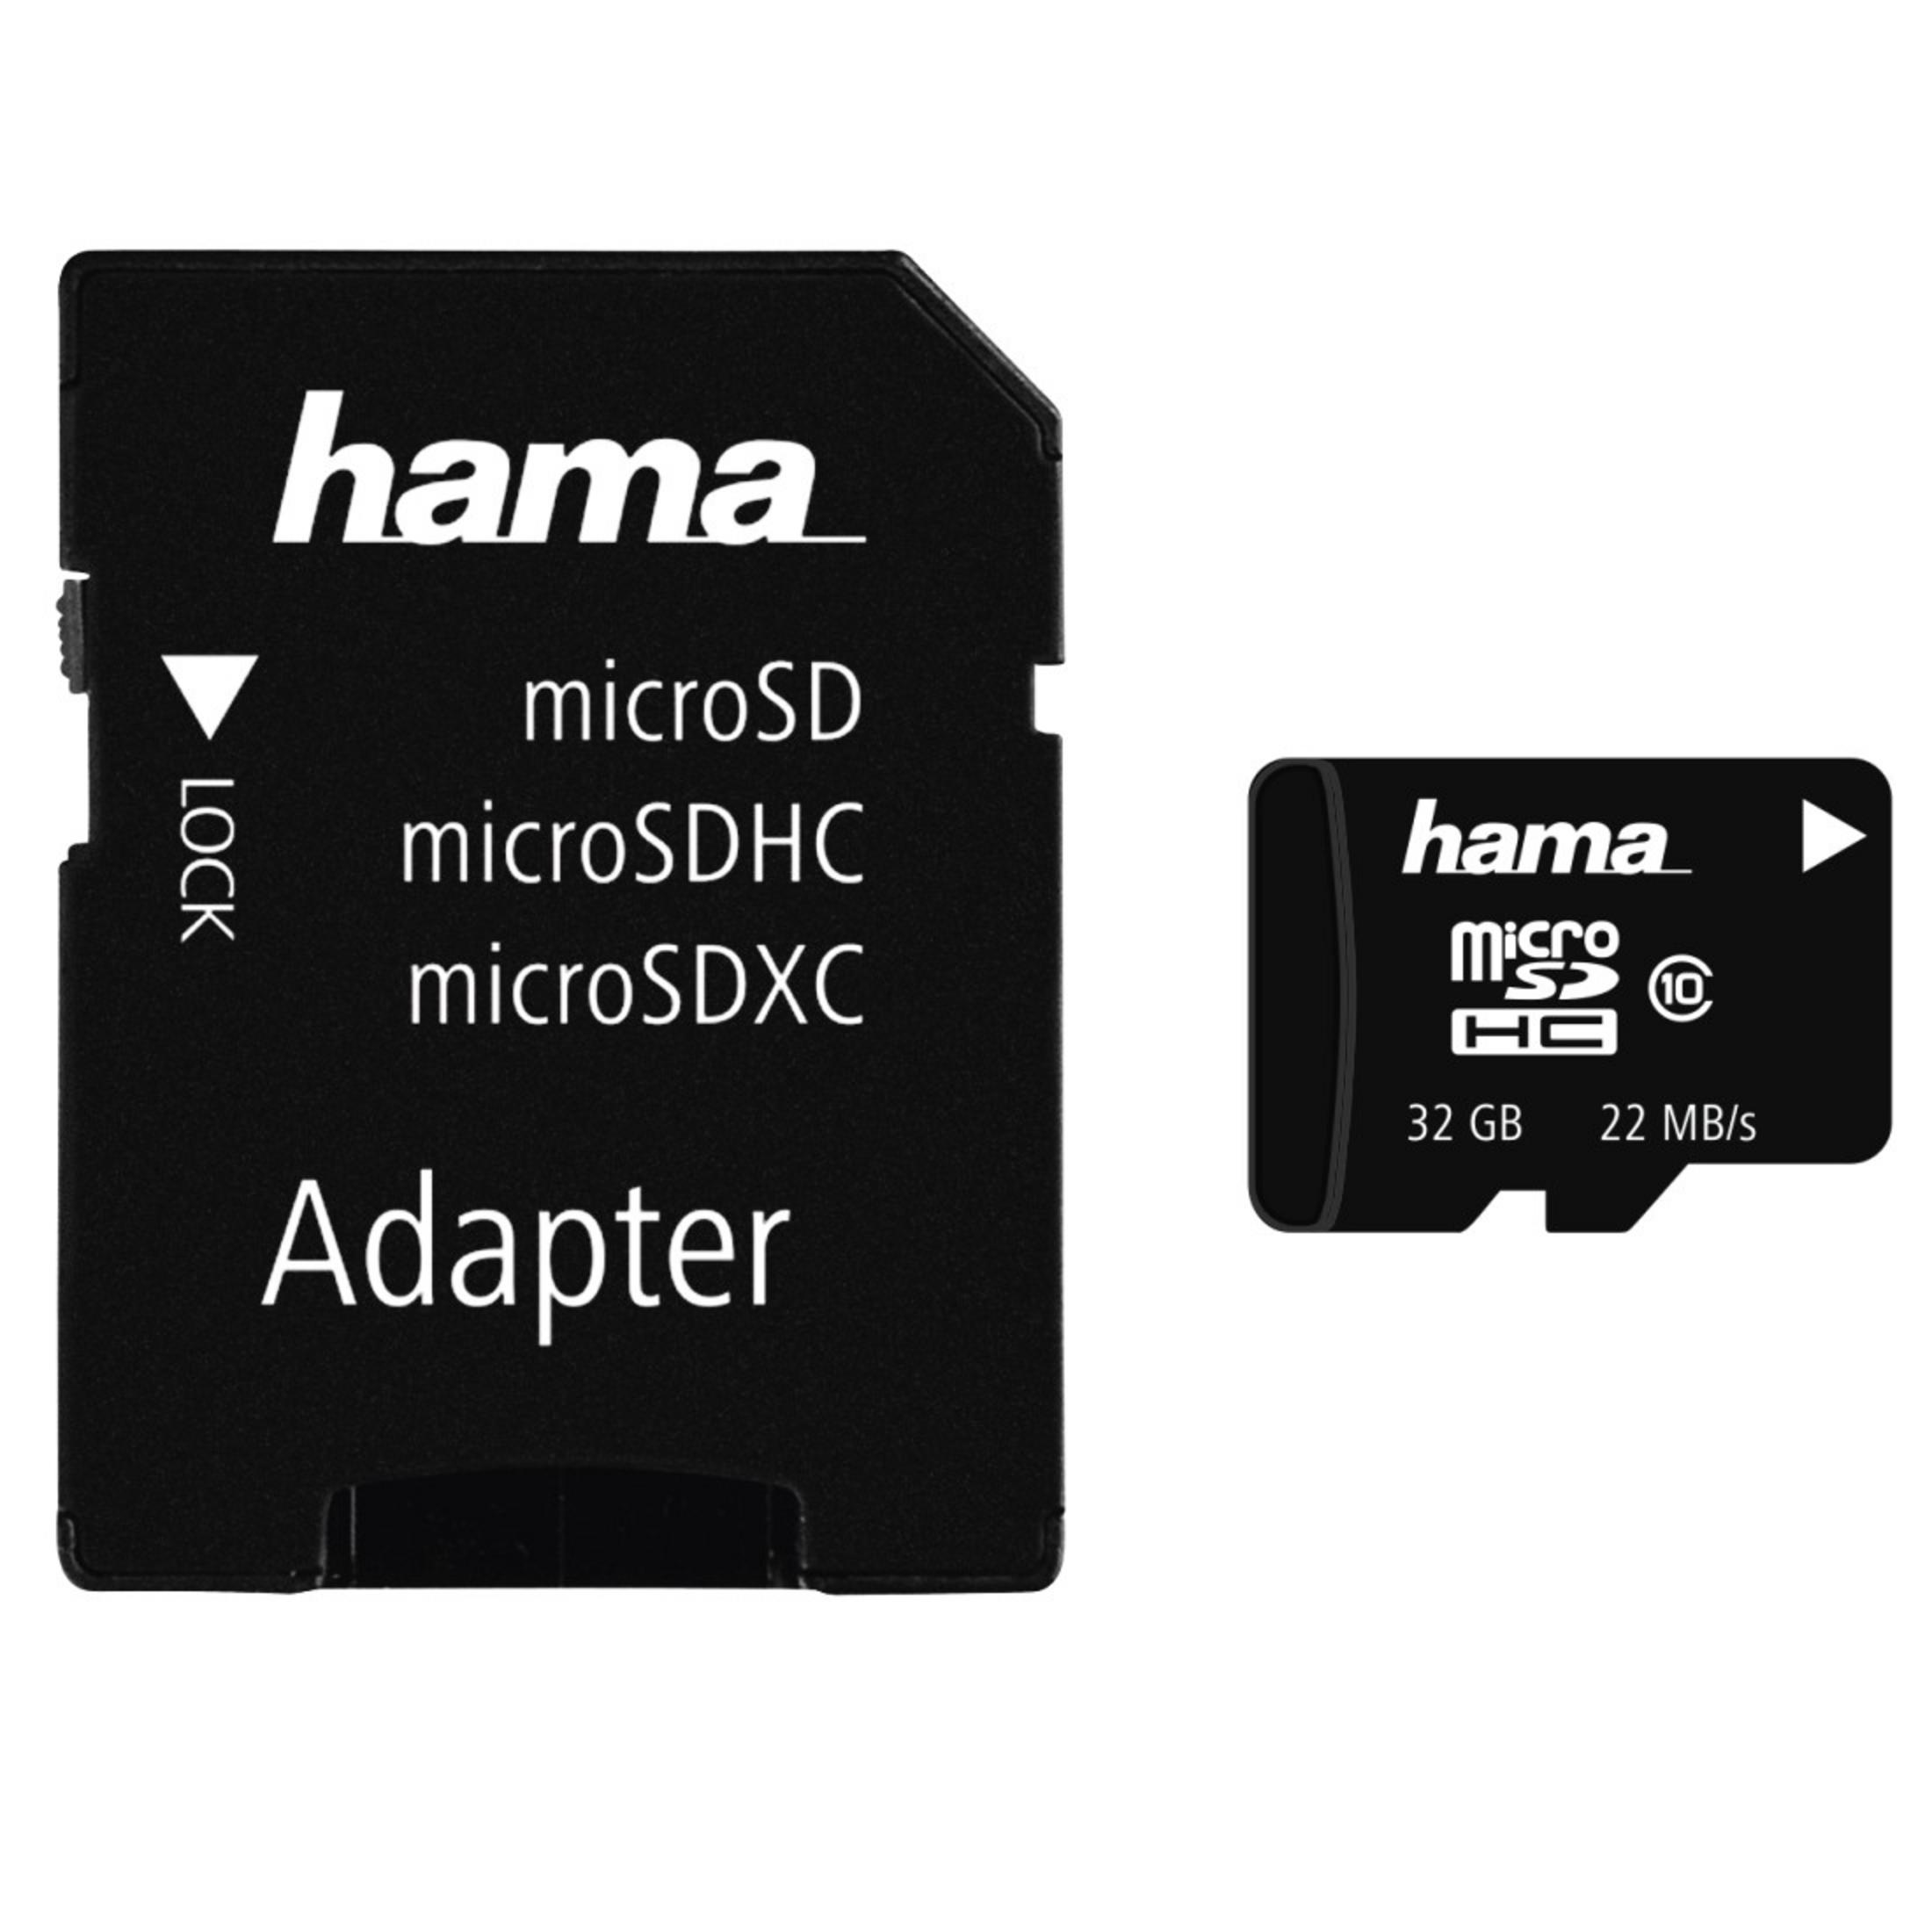 HAMA 108089 Micro-SDHC GB, +A/F, Speicherkarte, MB/s MSDHC 22MB/S C10 22 32 32GB